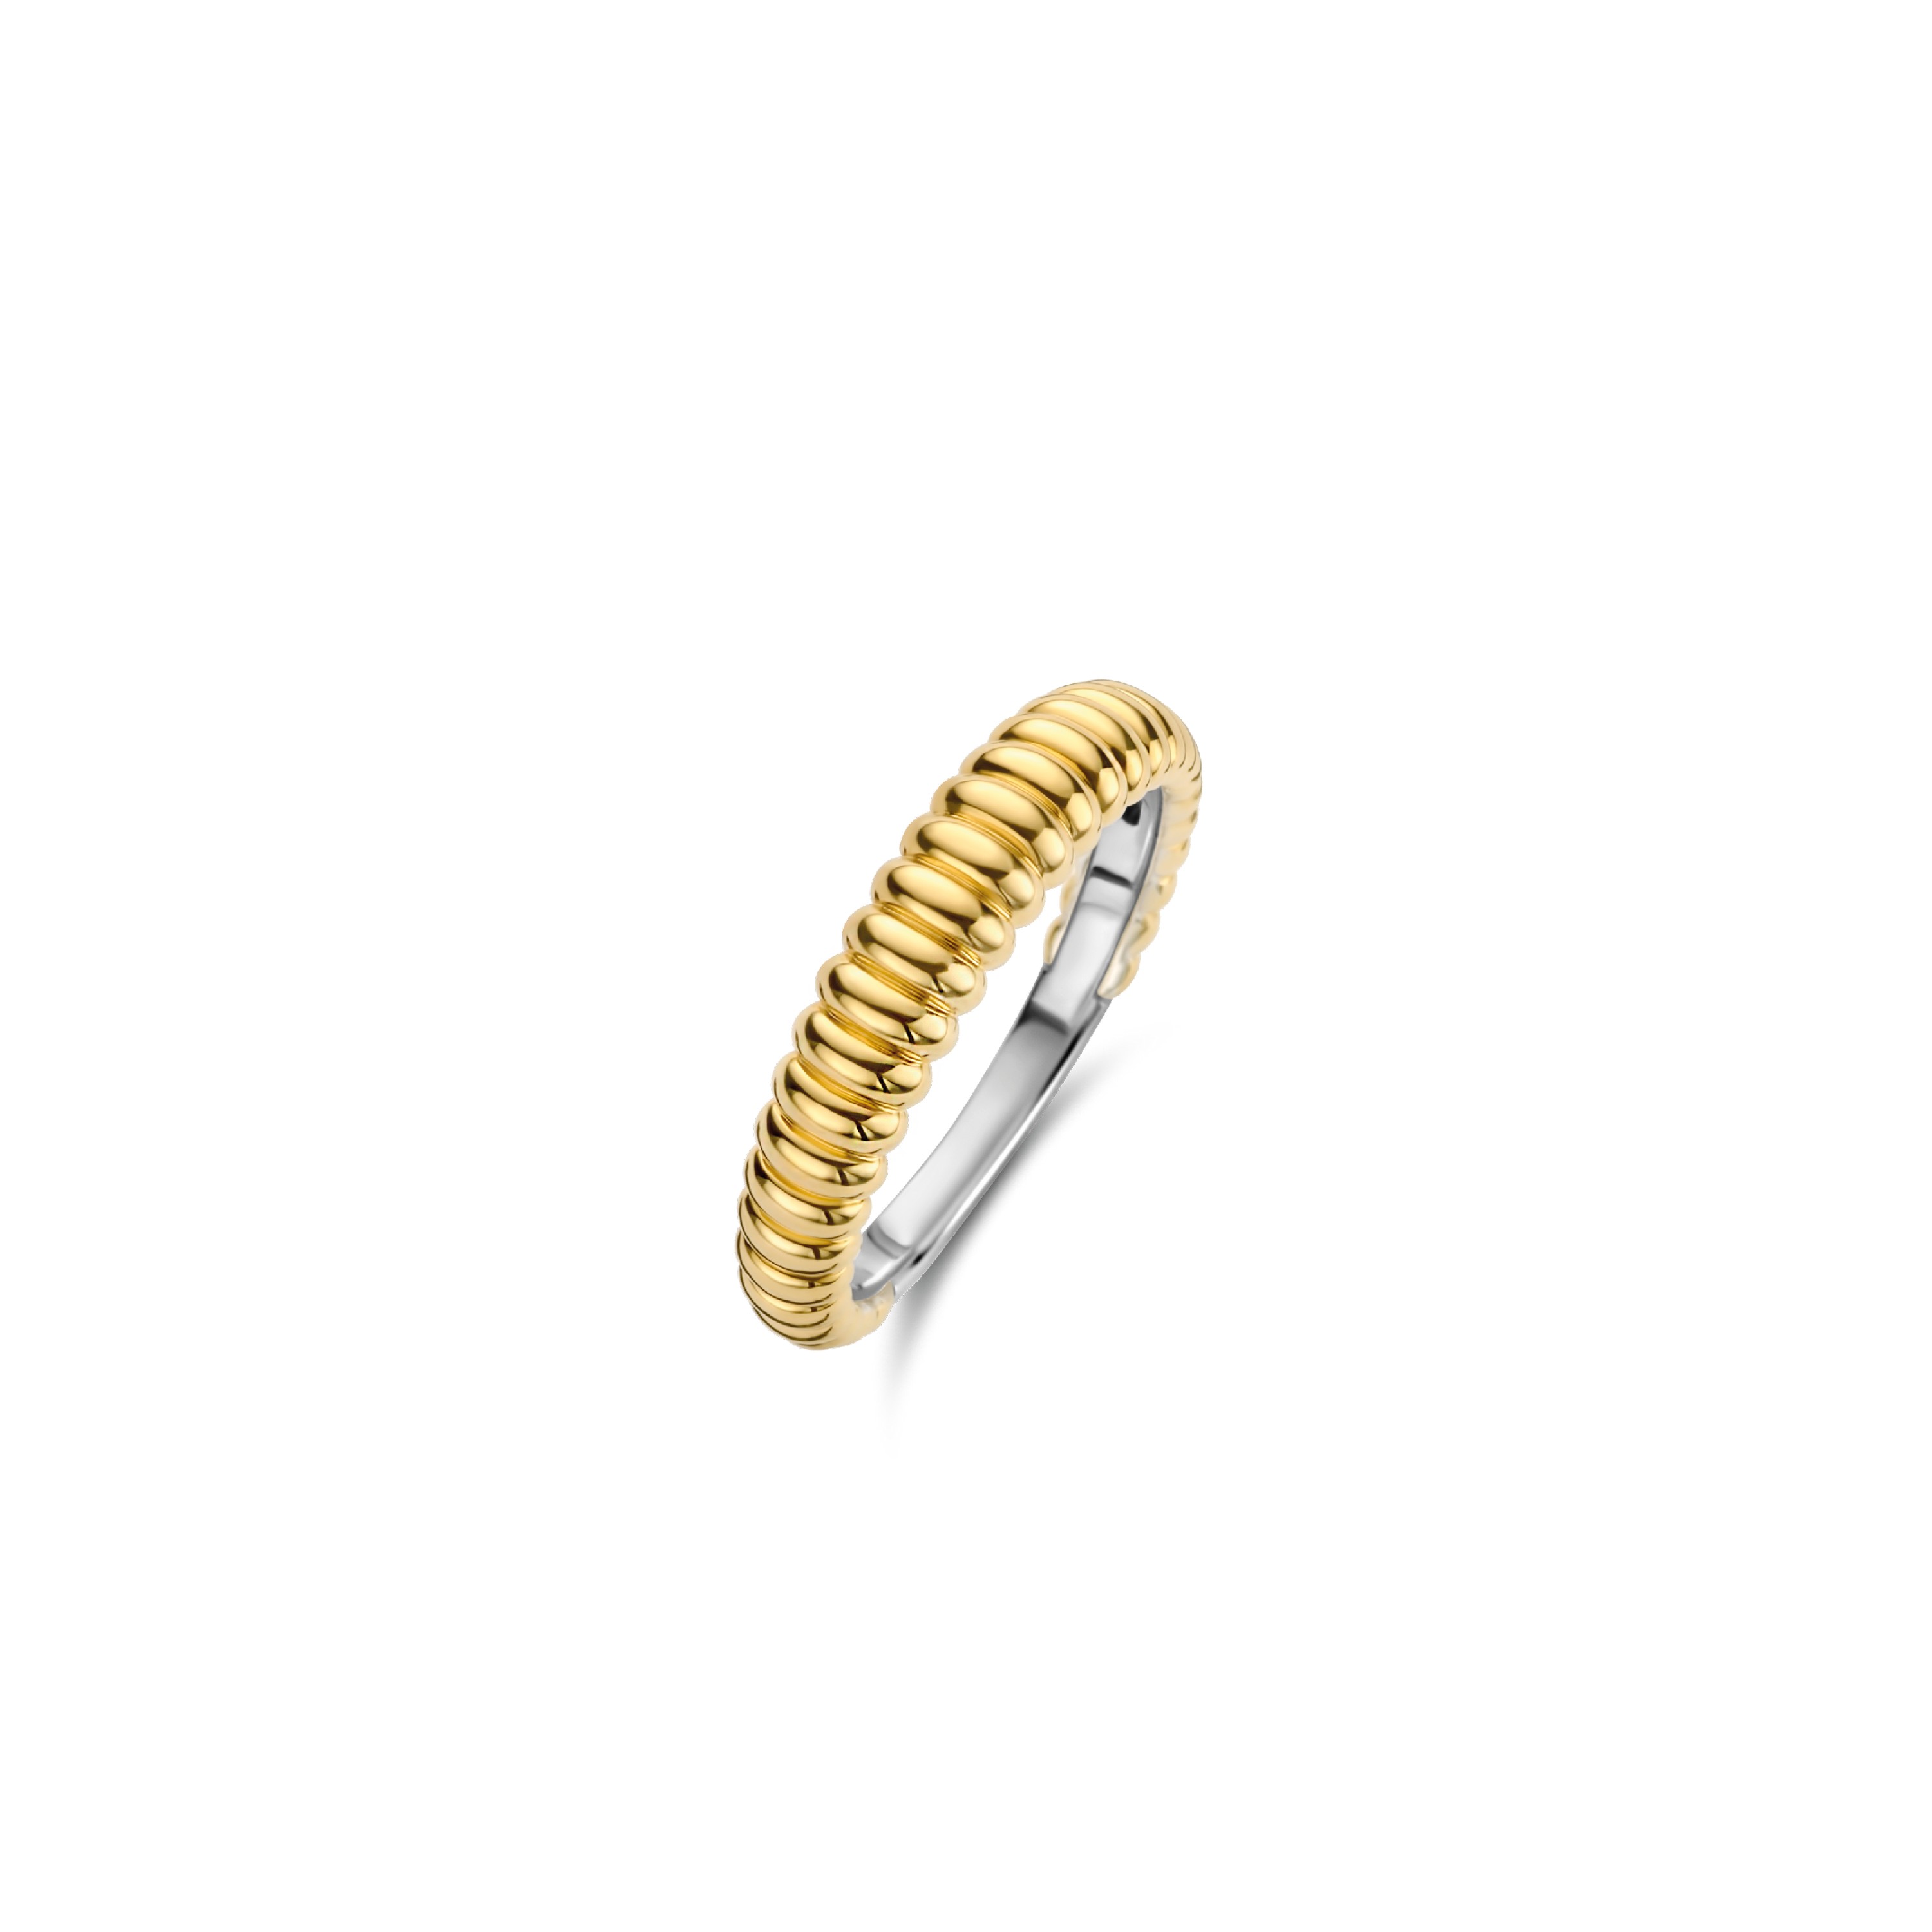 TI SENTO - Milano Ring 12218SY Gala Jewelers Inc. White Oak, PA